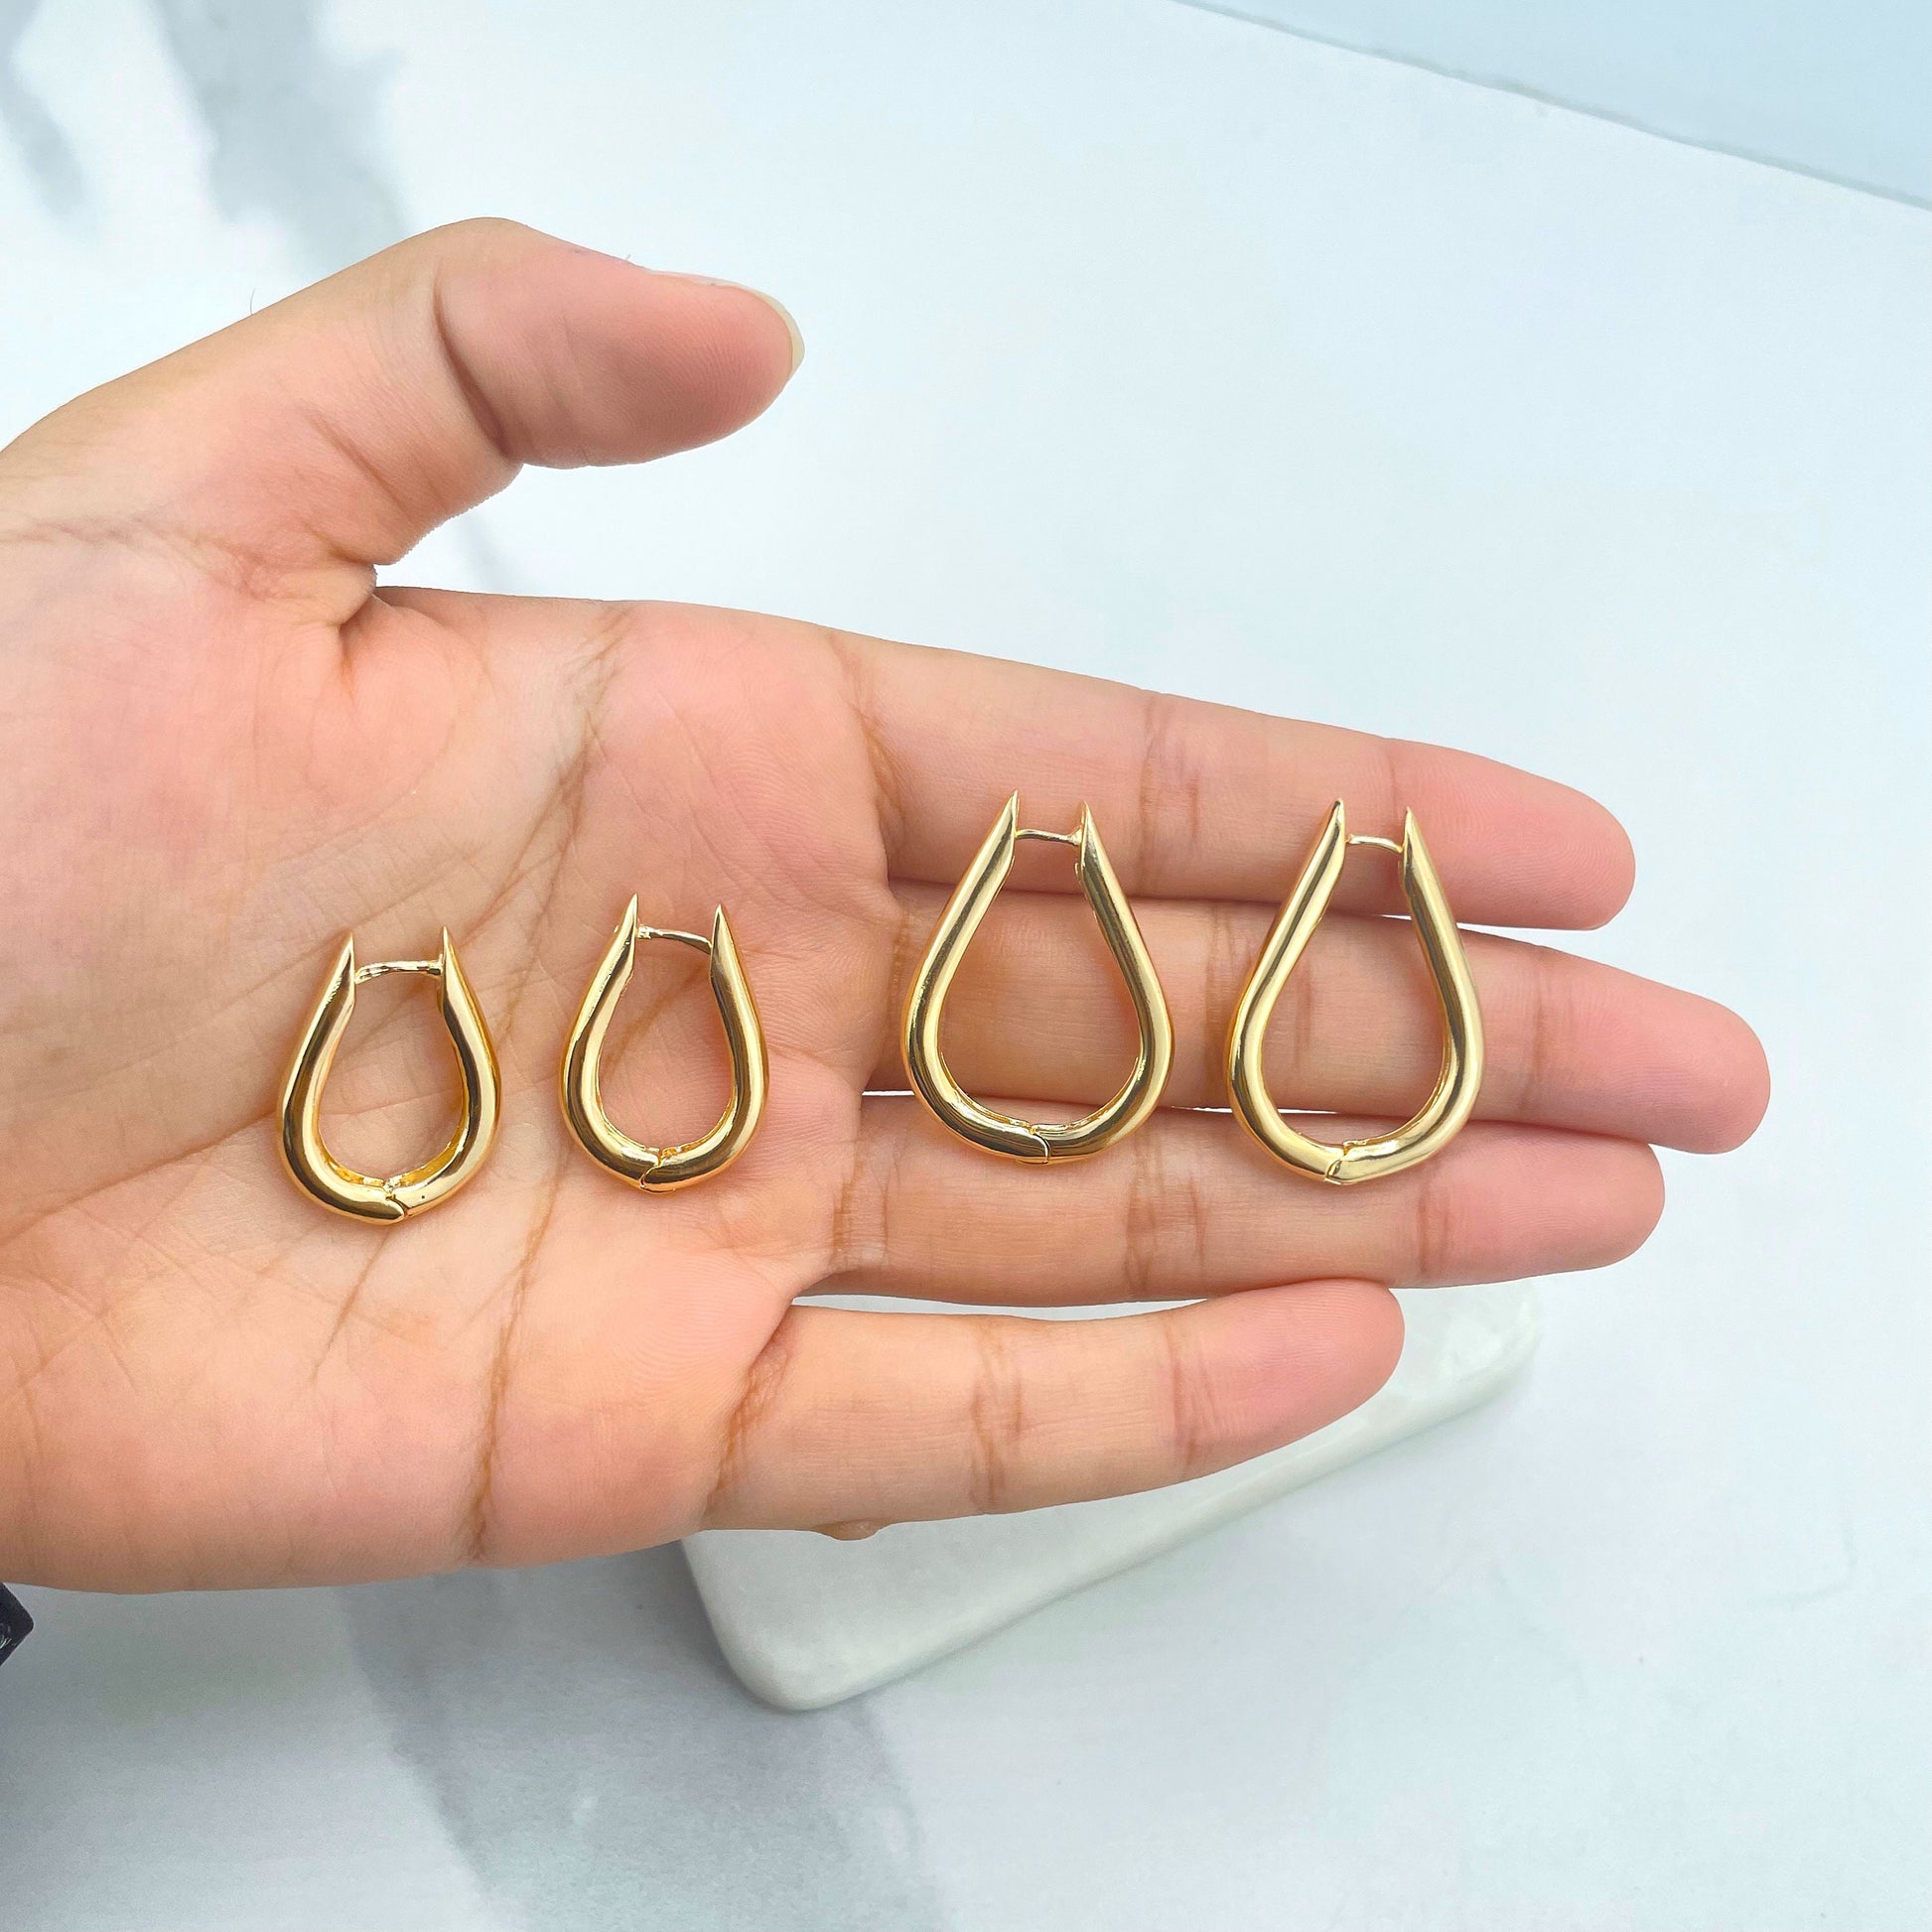 18k Gold Filled 24mm or 28mm Tear Shape, Oval Hoops Earrings Wholesale Jewelry Making Supplies